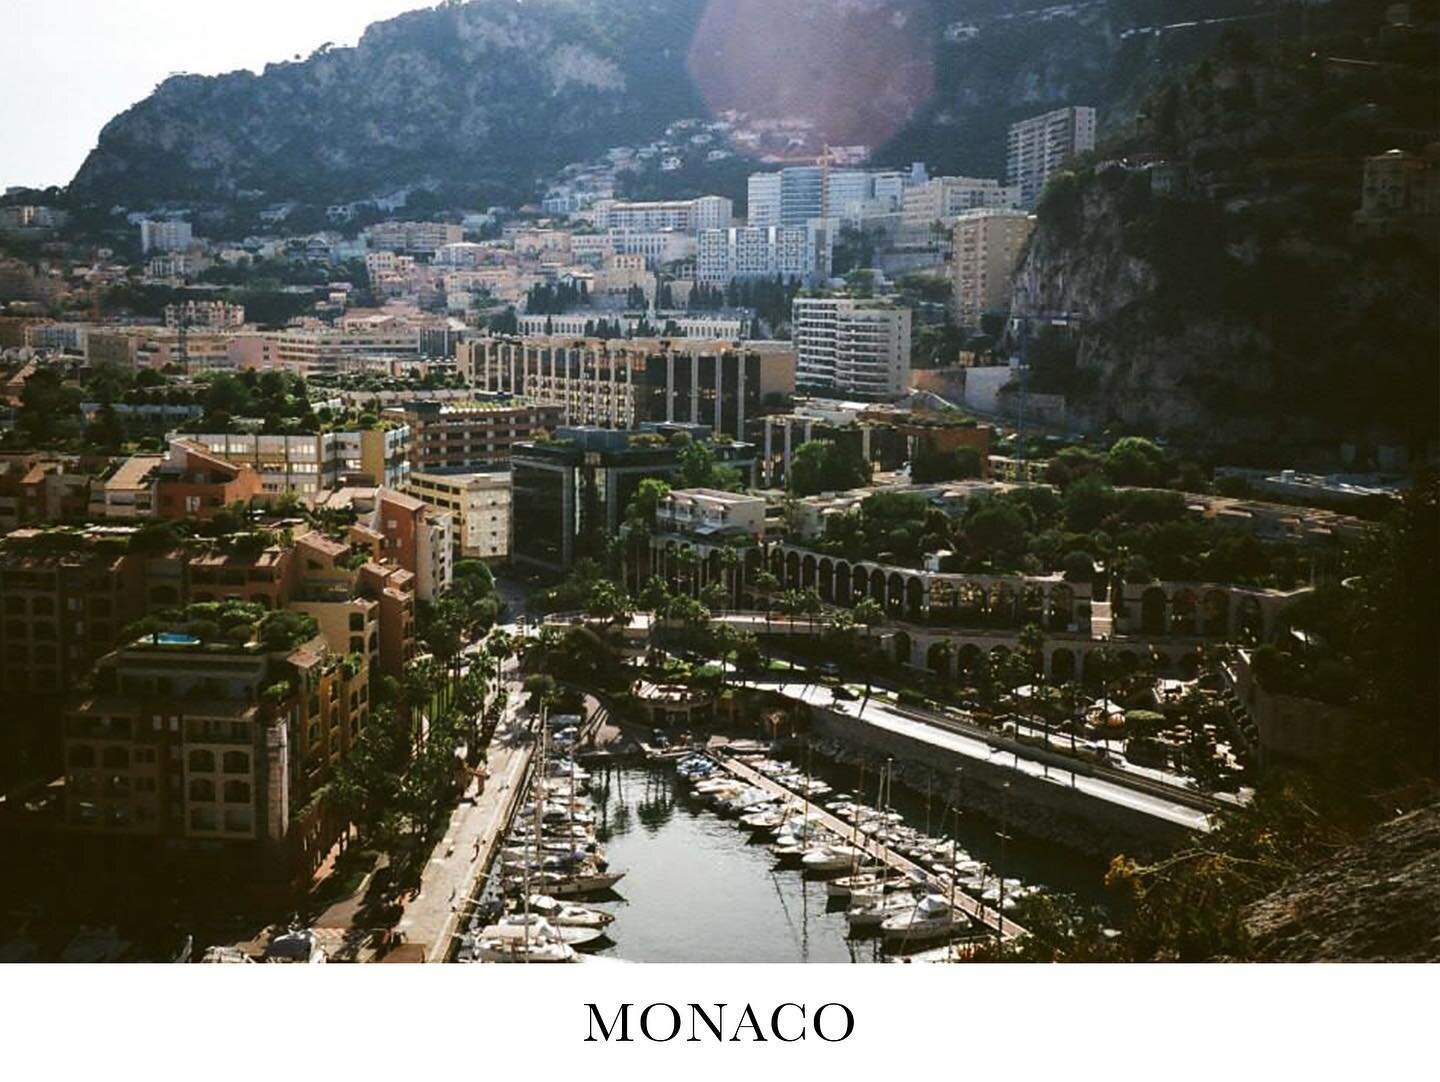 Monaco
.
#nikond80 #tamaron1750 
#monaco🇮🇩 #travelphotography #nomadict #cntraveler #traveldudes #travelbloggeres #dametraveler #igshotz #backpackerstory #lonelyplanet #culturetrip